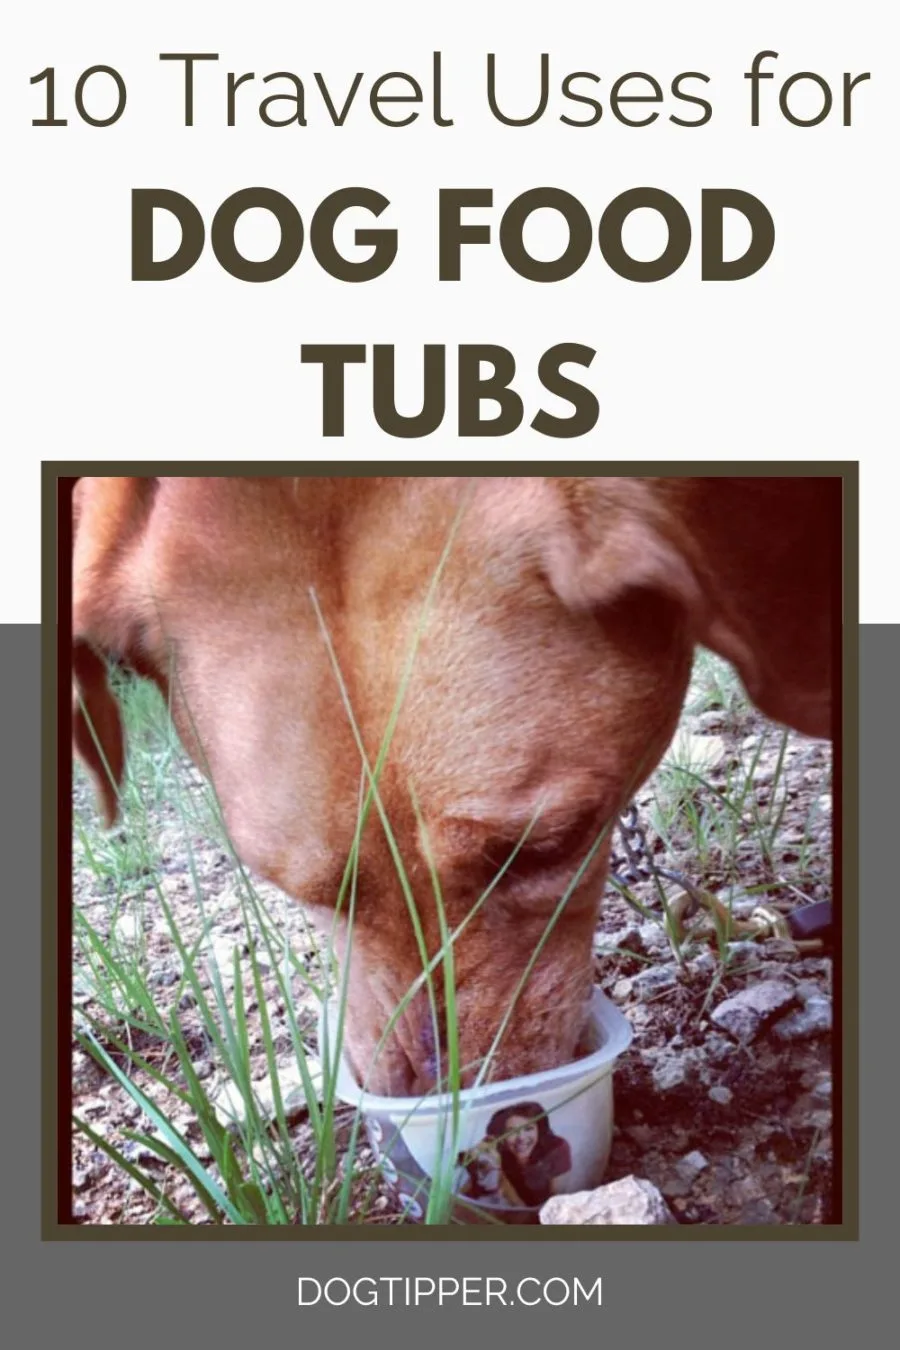 10 Travel Uses for Dog Food Tubs!